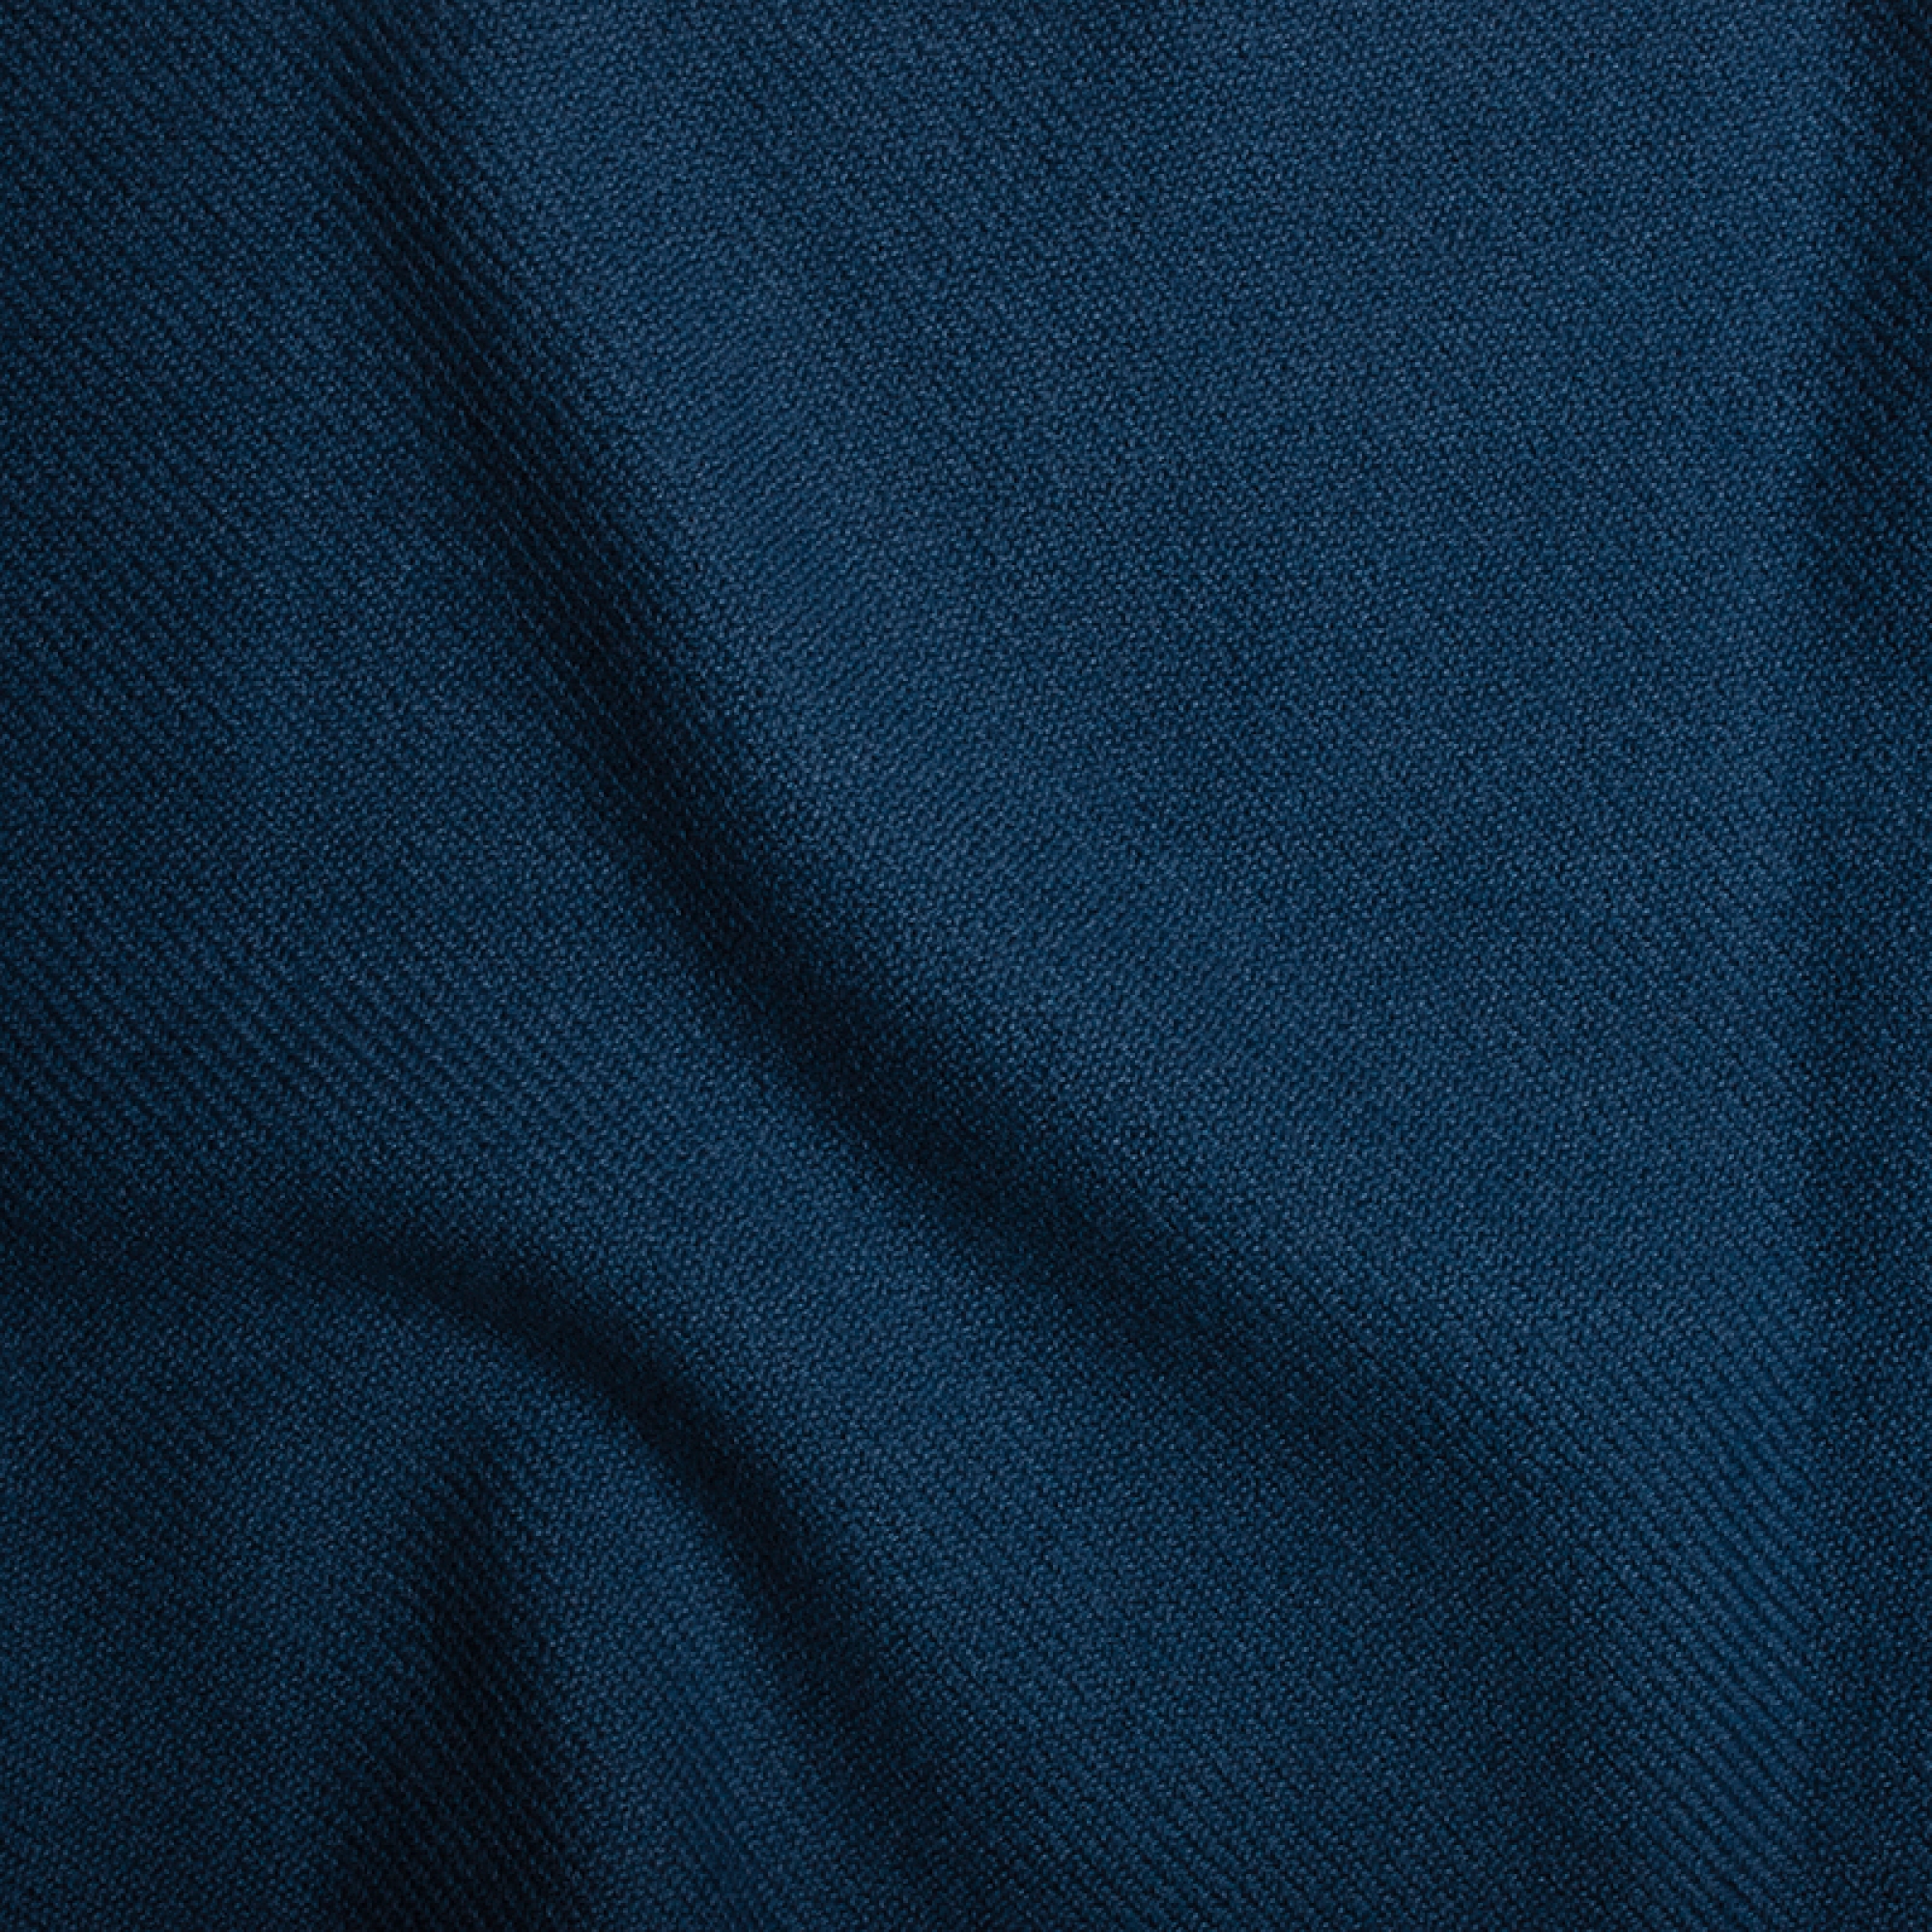 Cashmere accessoires kaschmir plaid decke toodoo plain l 220 x 220 preussischblau 220x220cm